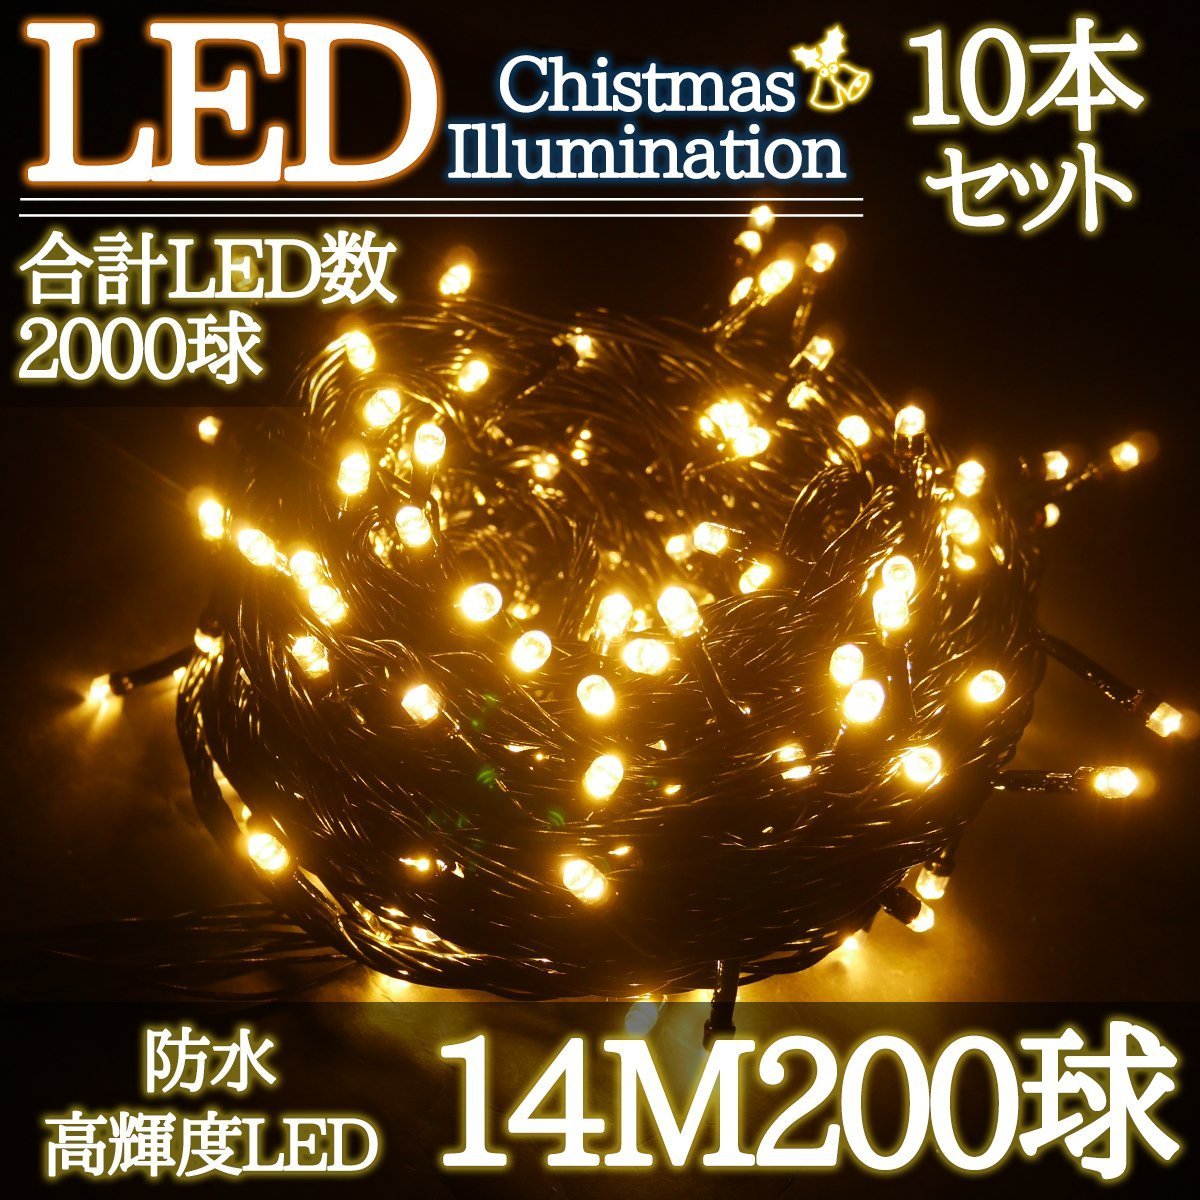 LEDイルミネーション 14M LED200灯 クリスマス つらら ブラックコード 電飾 屋外 ガーデン 庭 防水 連結可能 ゴールド 10箱同梱 KR-86